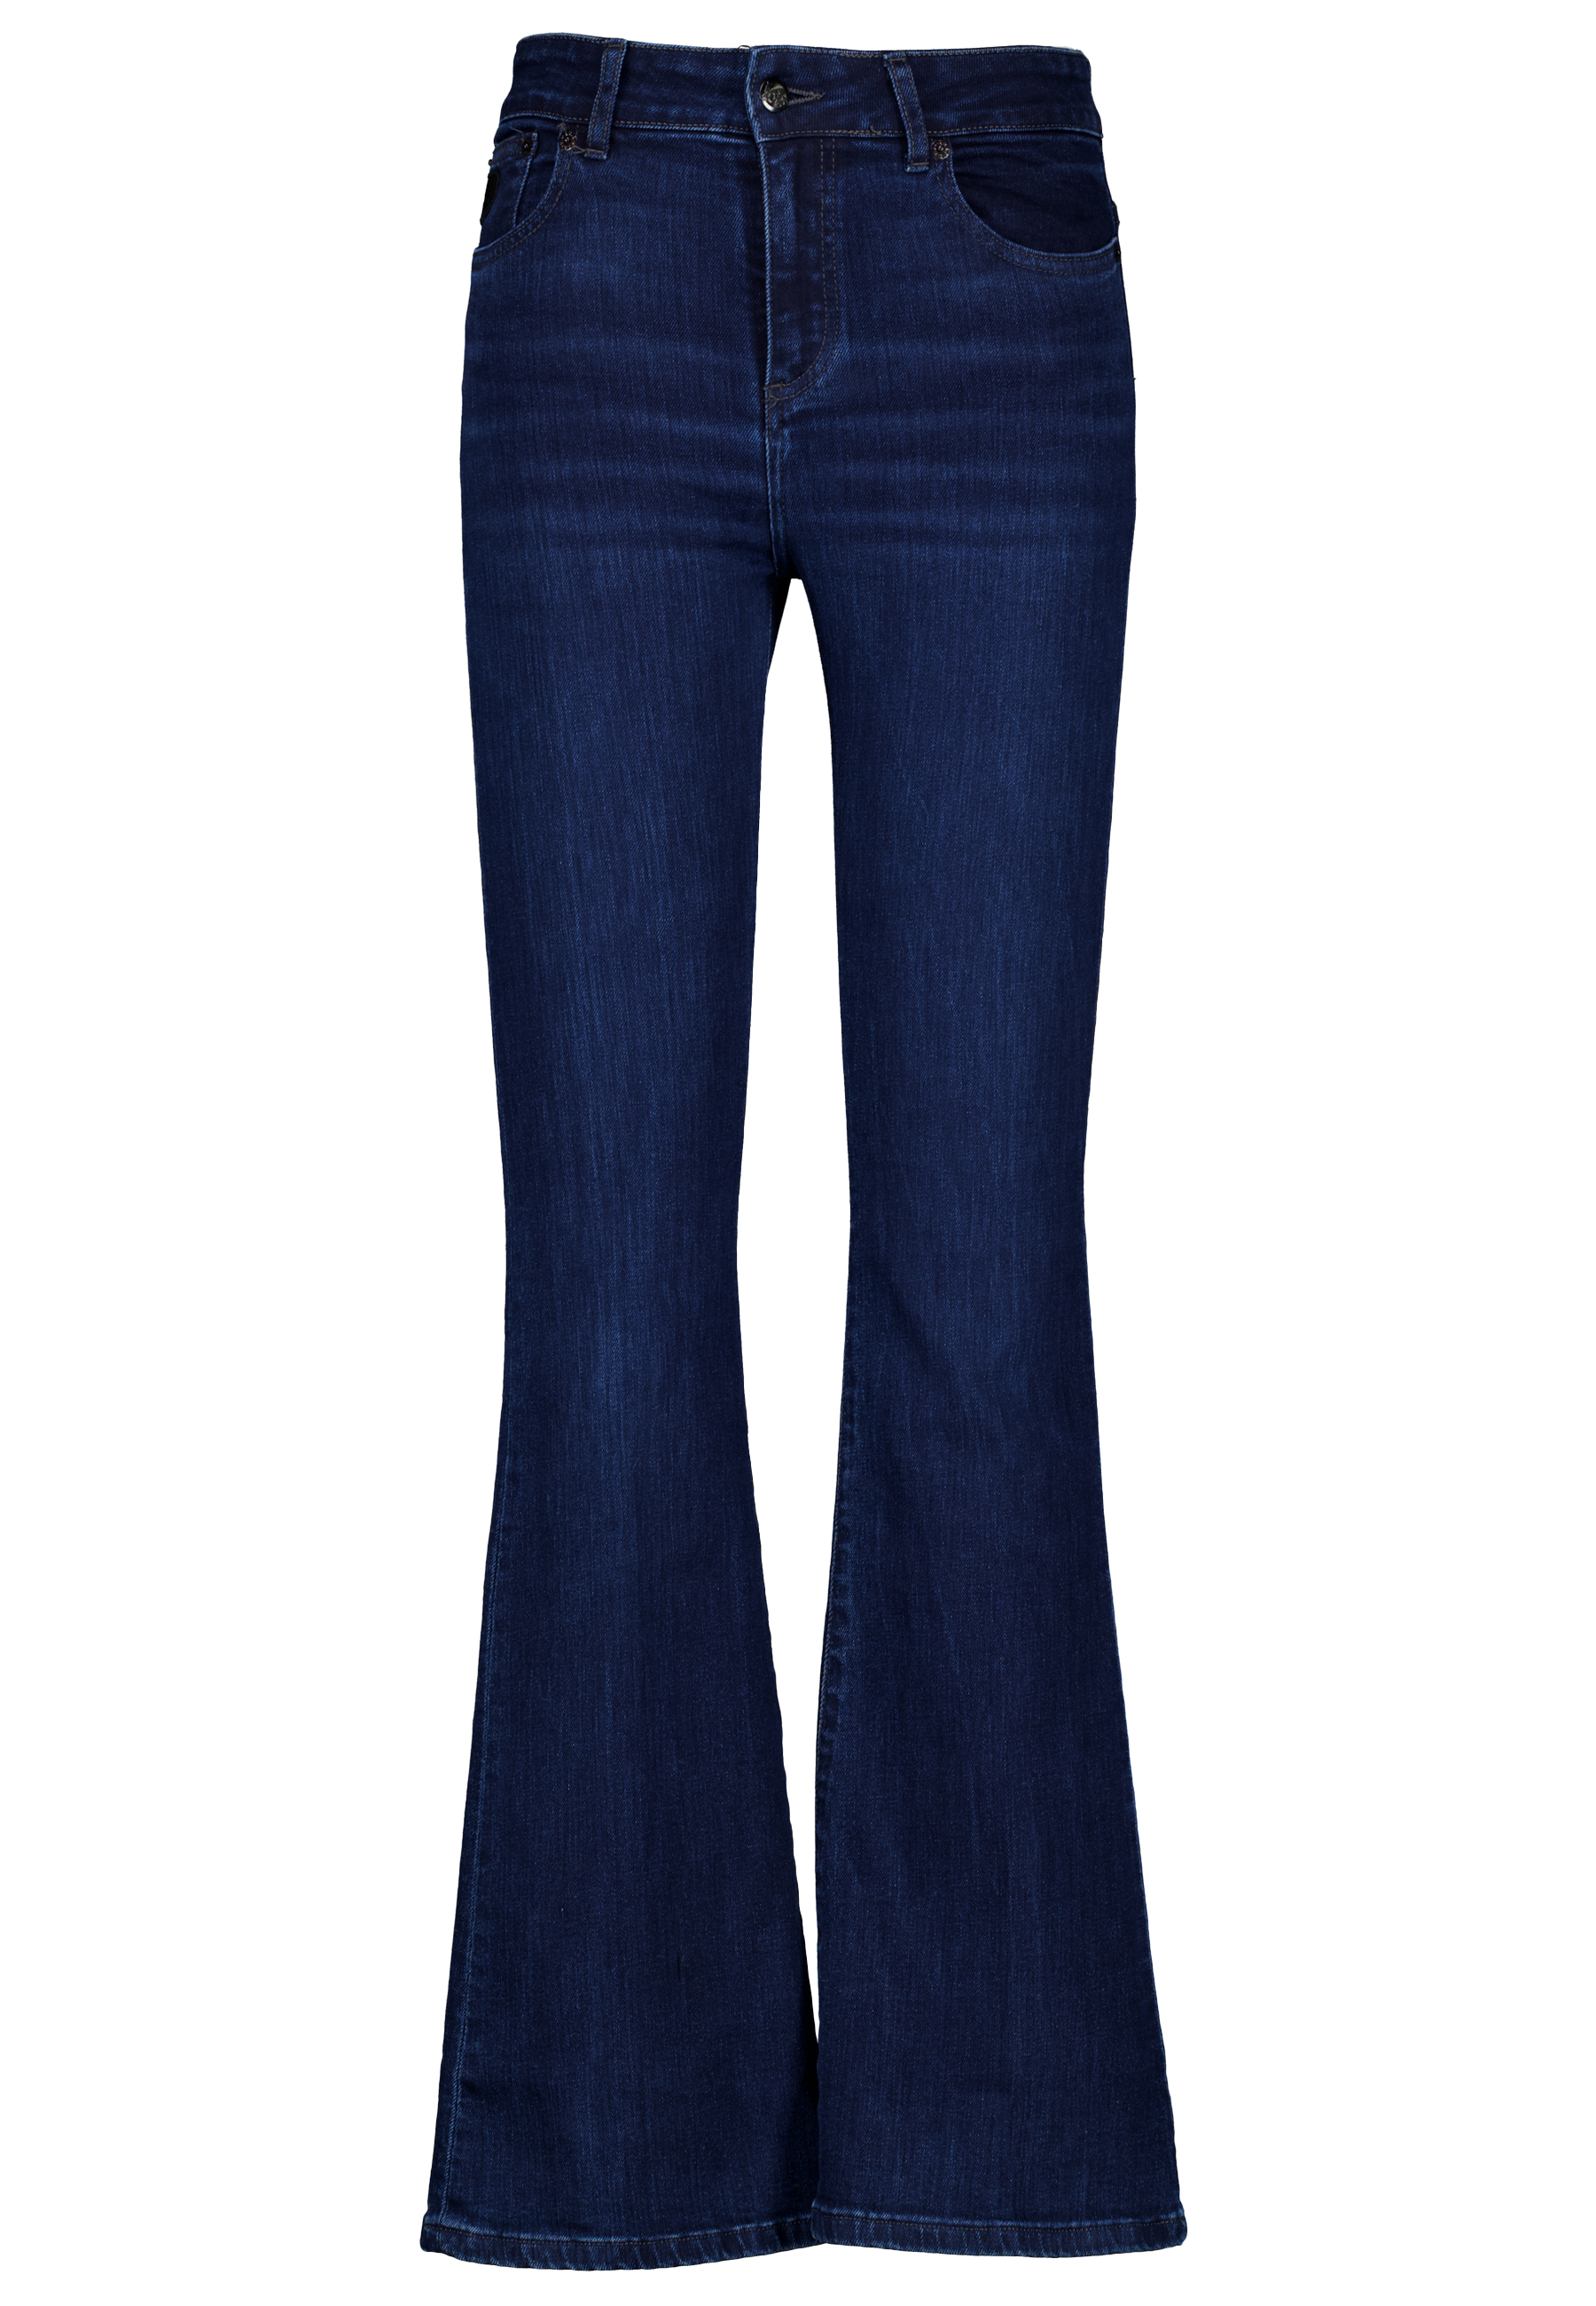 Lois jeans blauw Dames maat 26/32